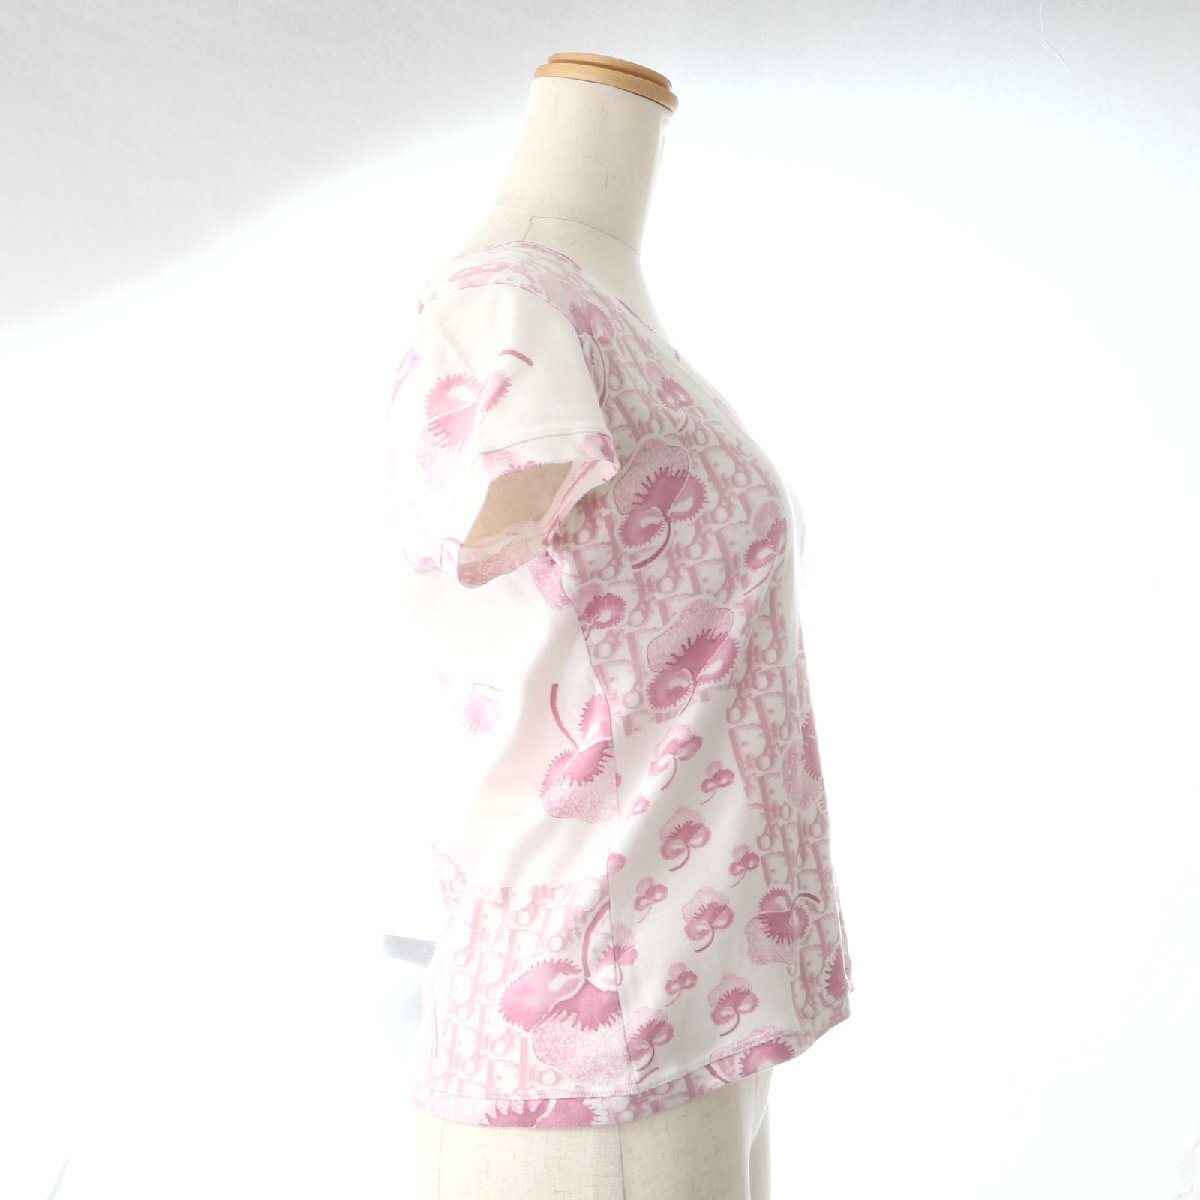 # Christian Dior # Toro ta- короткий рукав футболка V шея цветочный принт 5P16155953#38#S размер соответствует Pink Lady -sEEE 0130-E16